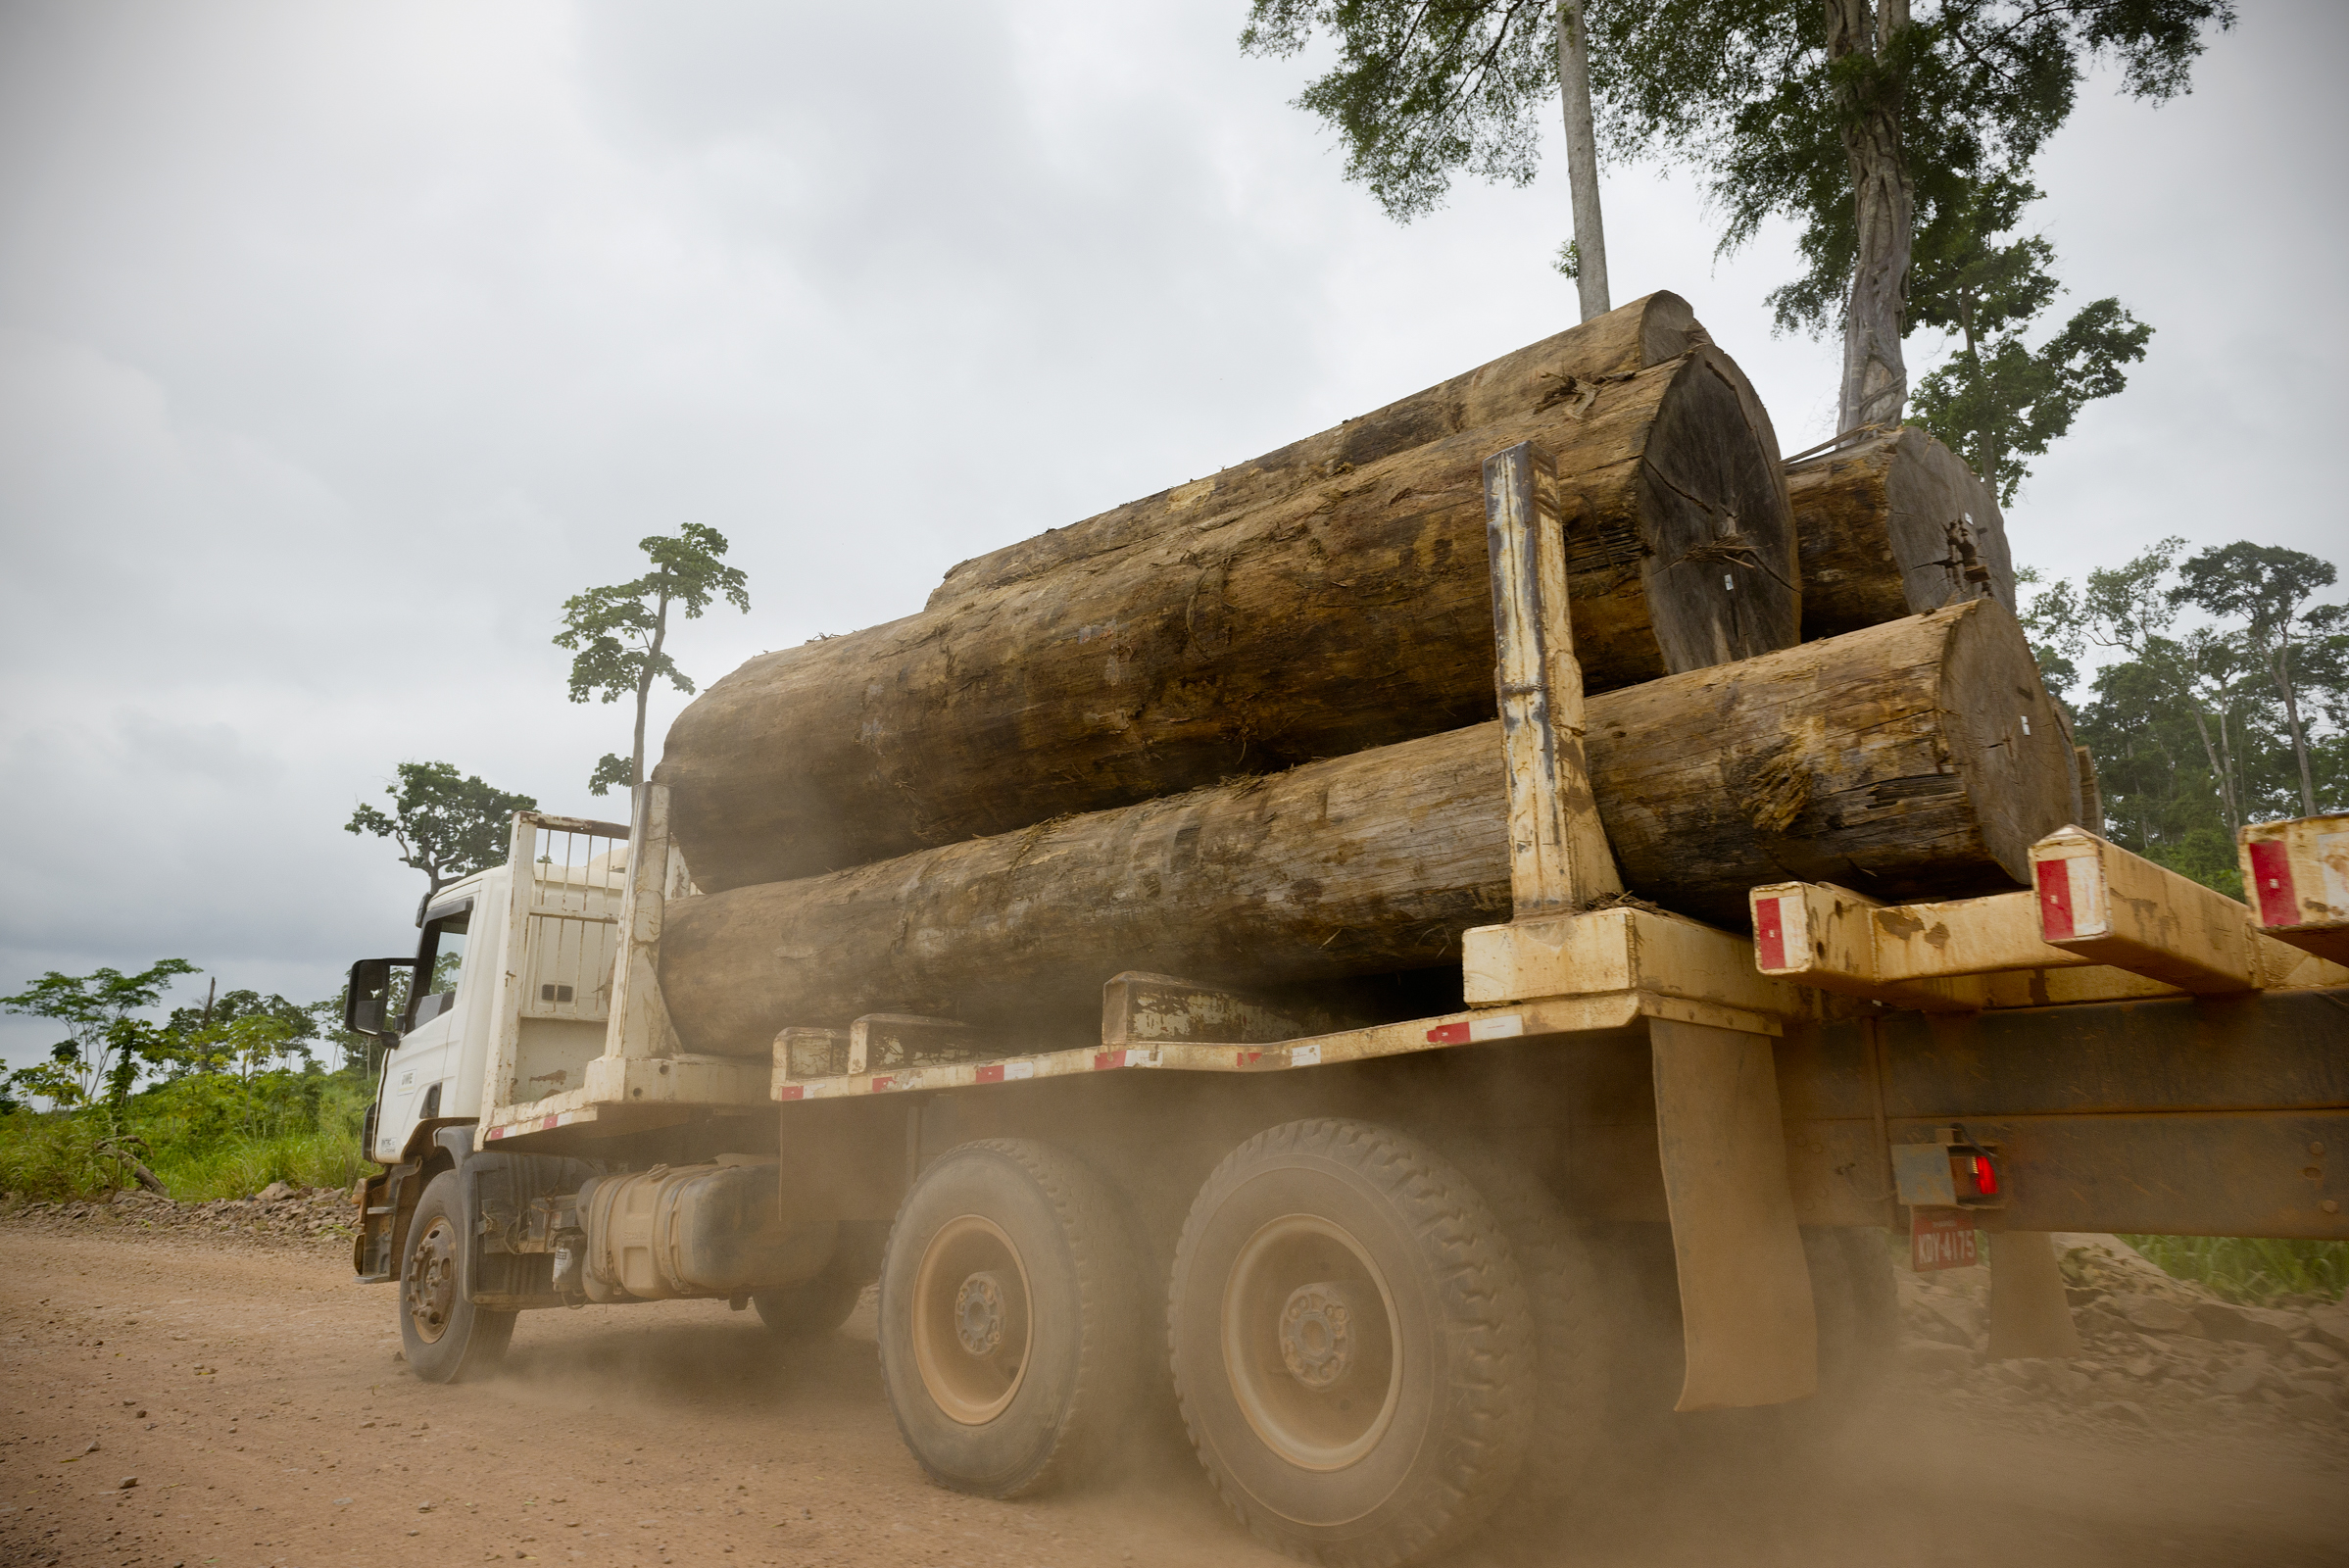 política socioambiental madeira